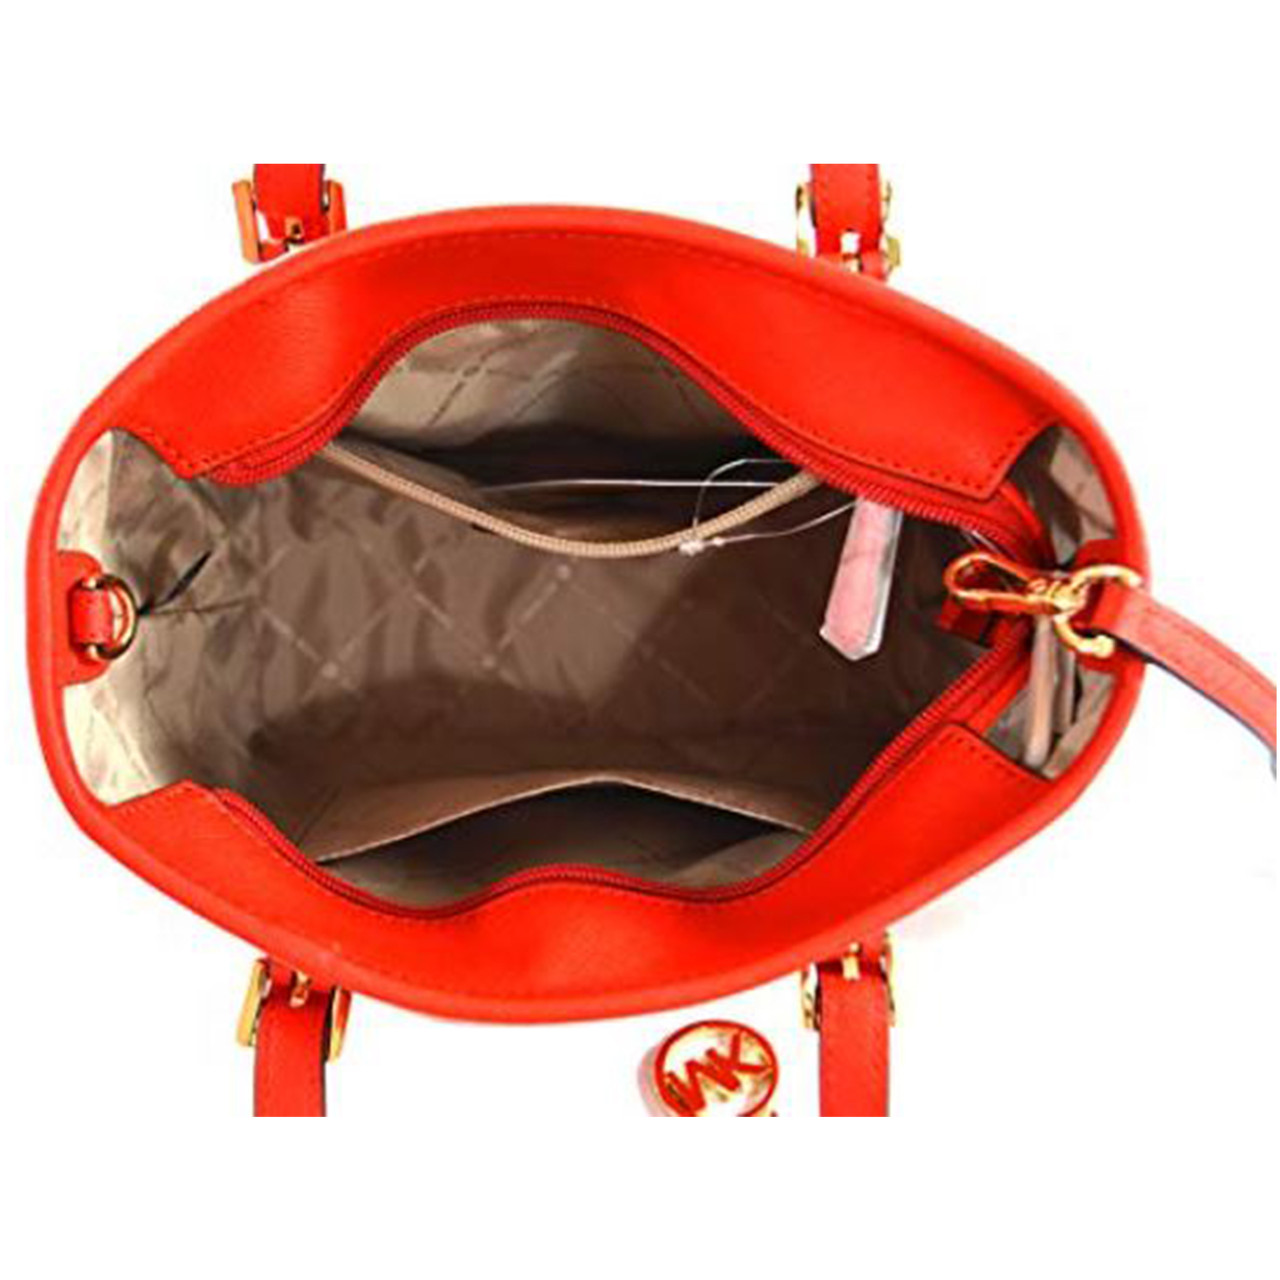 Michael Kors Jet Set Travel 35T9GTVT0L Extra-Small Saffiano Leather